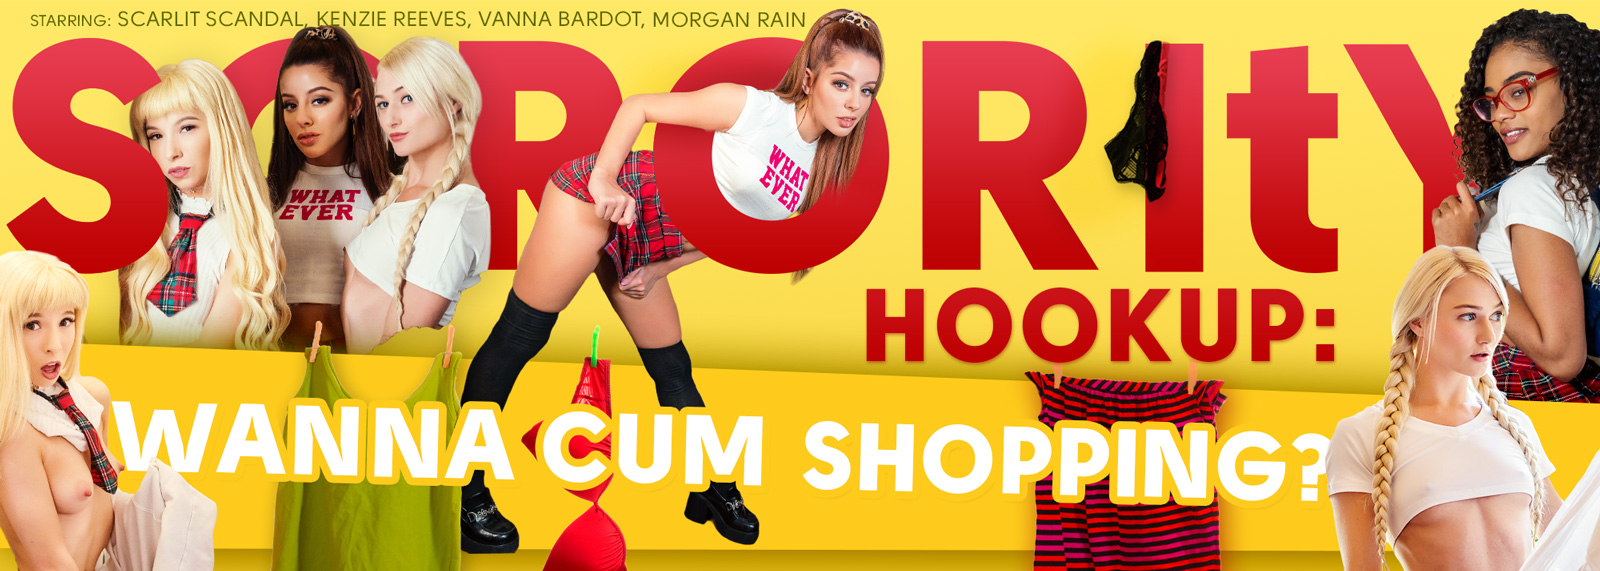 Sorority Hookup: Wanna Cum Shopping? with Morgan Rain  Slideshow